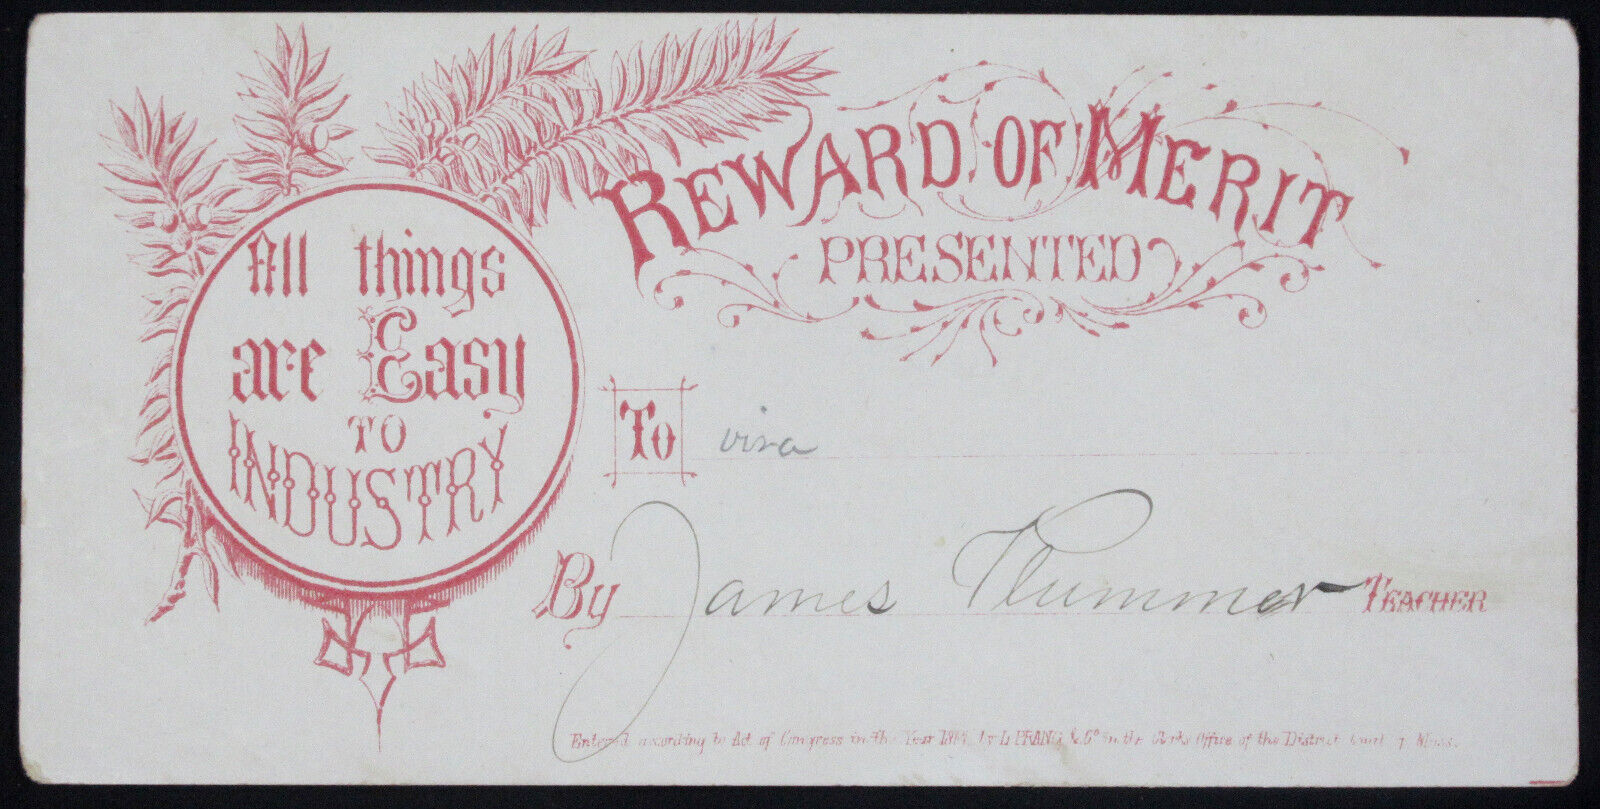 Vintage Reward of Merit Card by L. Prang & Co. Boston Mass. Act of Congress 1867